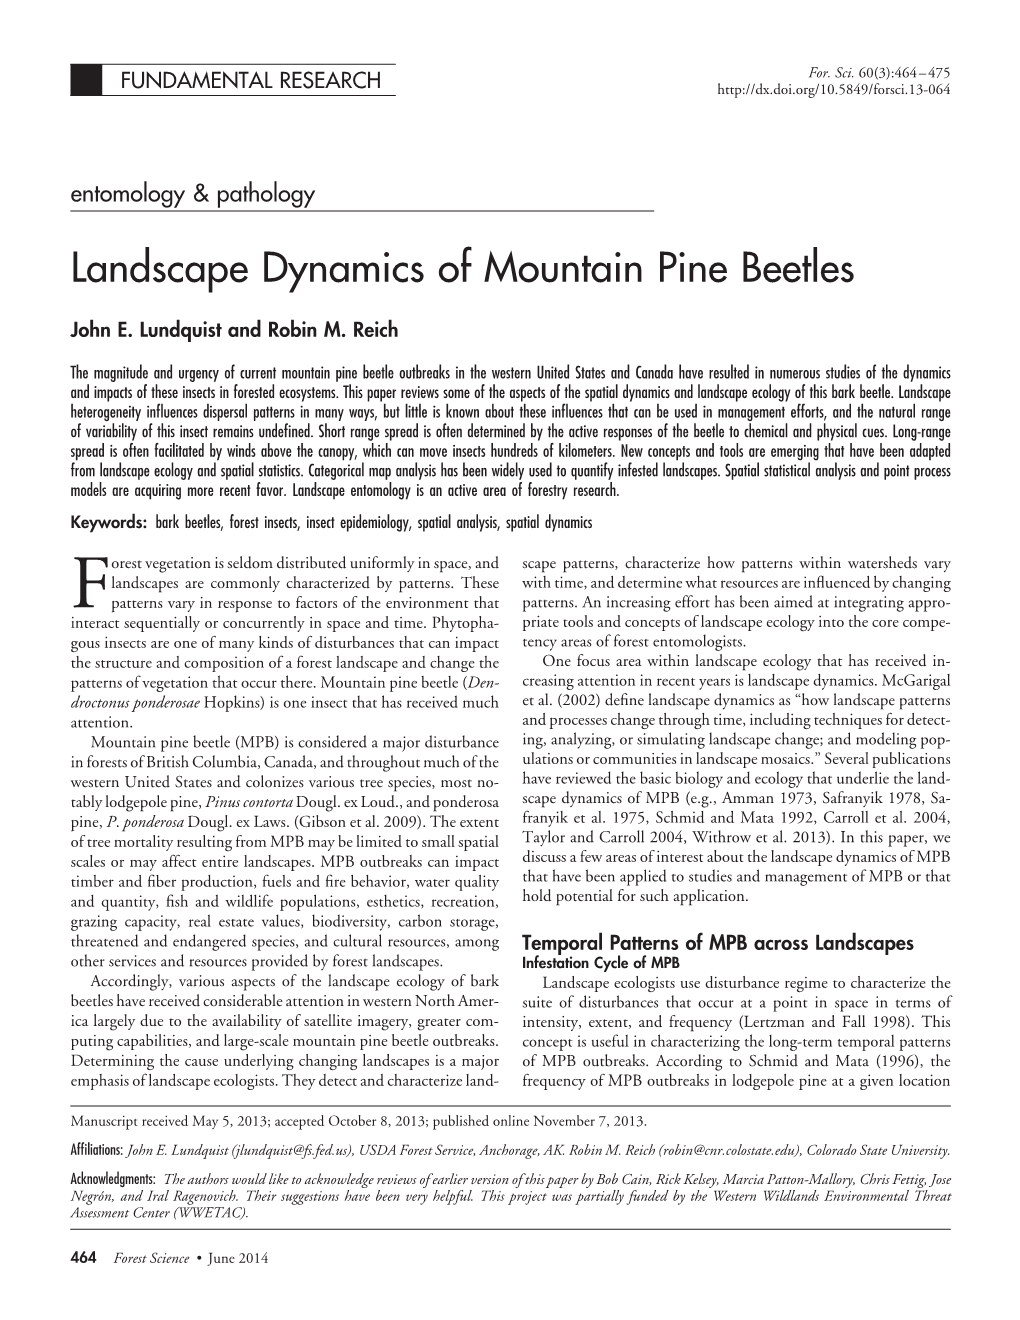 Landscape Dynamics of Mountain Pine Beetles